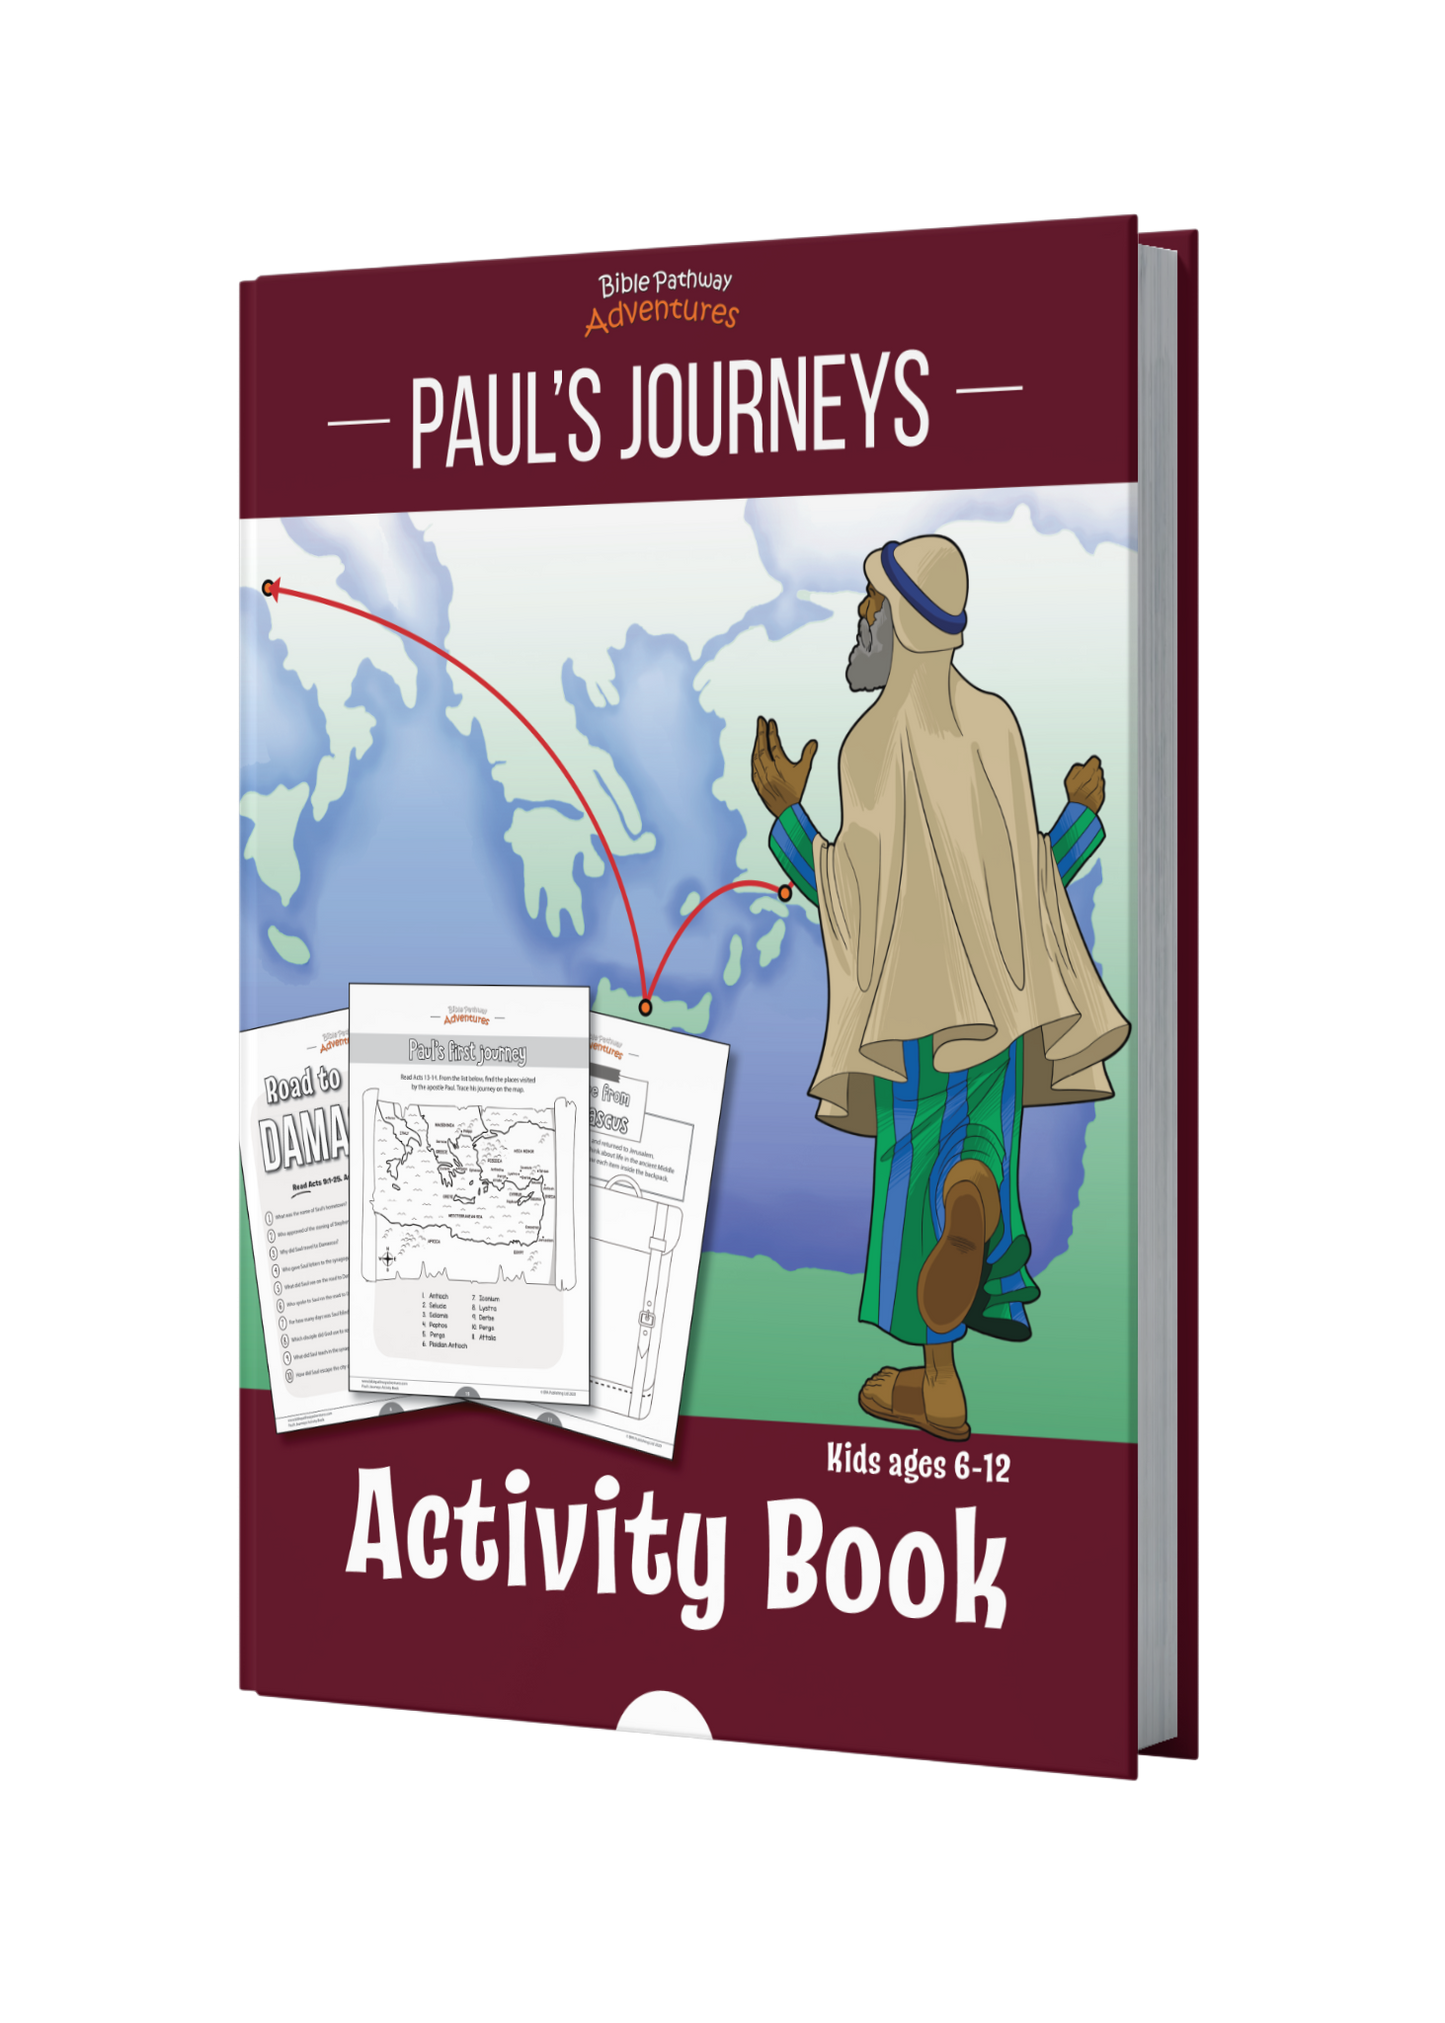 Paul's Journeys Activity Book (paperback)